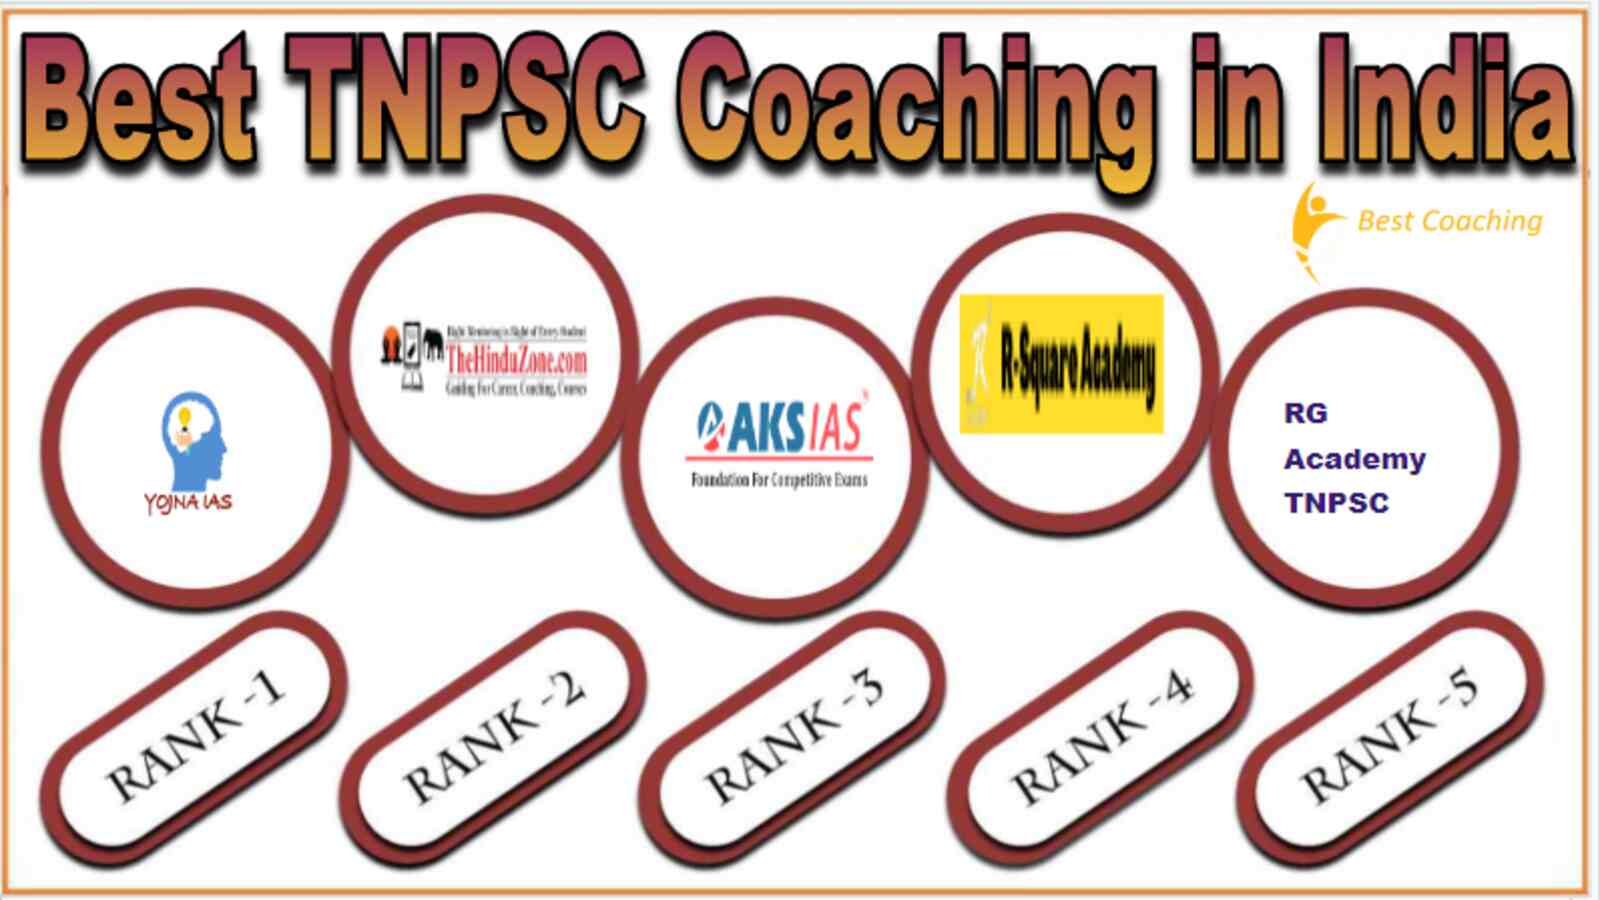 Best TNPSC Coaching in India